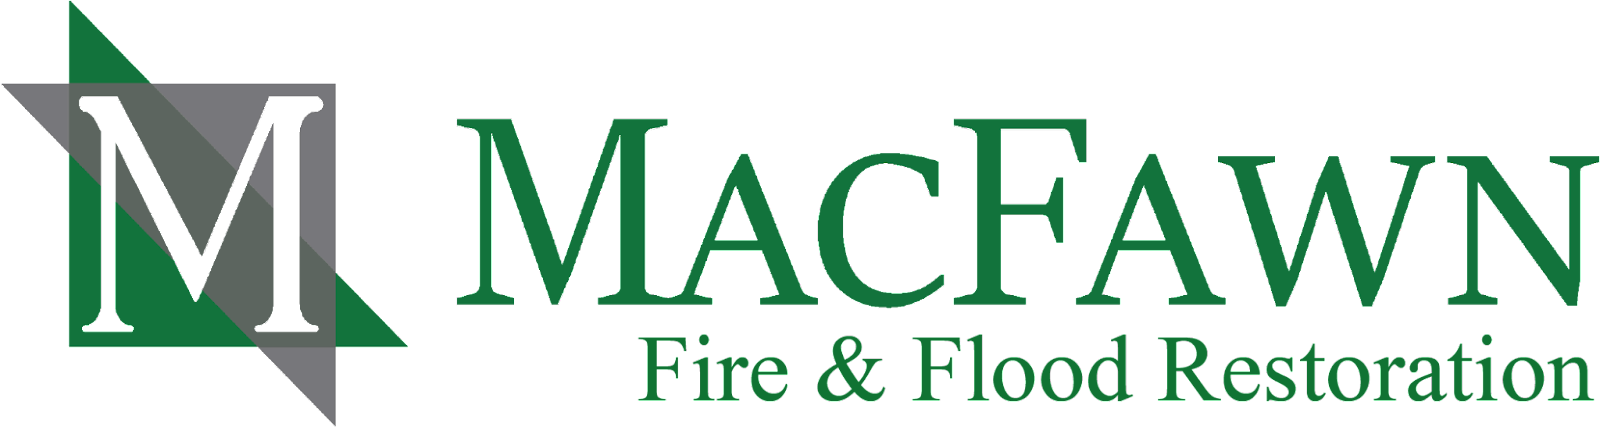 MacFawn Fire & Flood Restoration